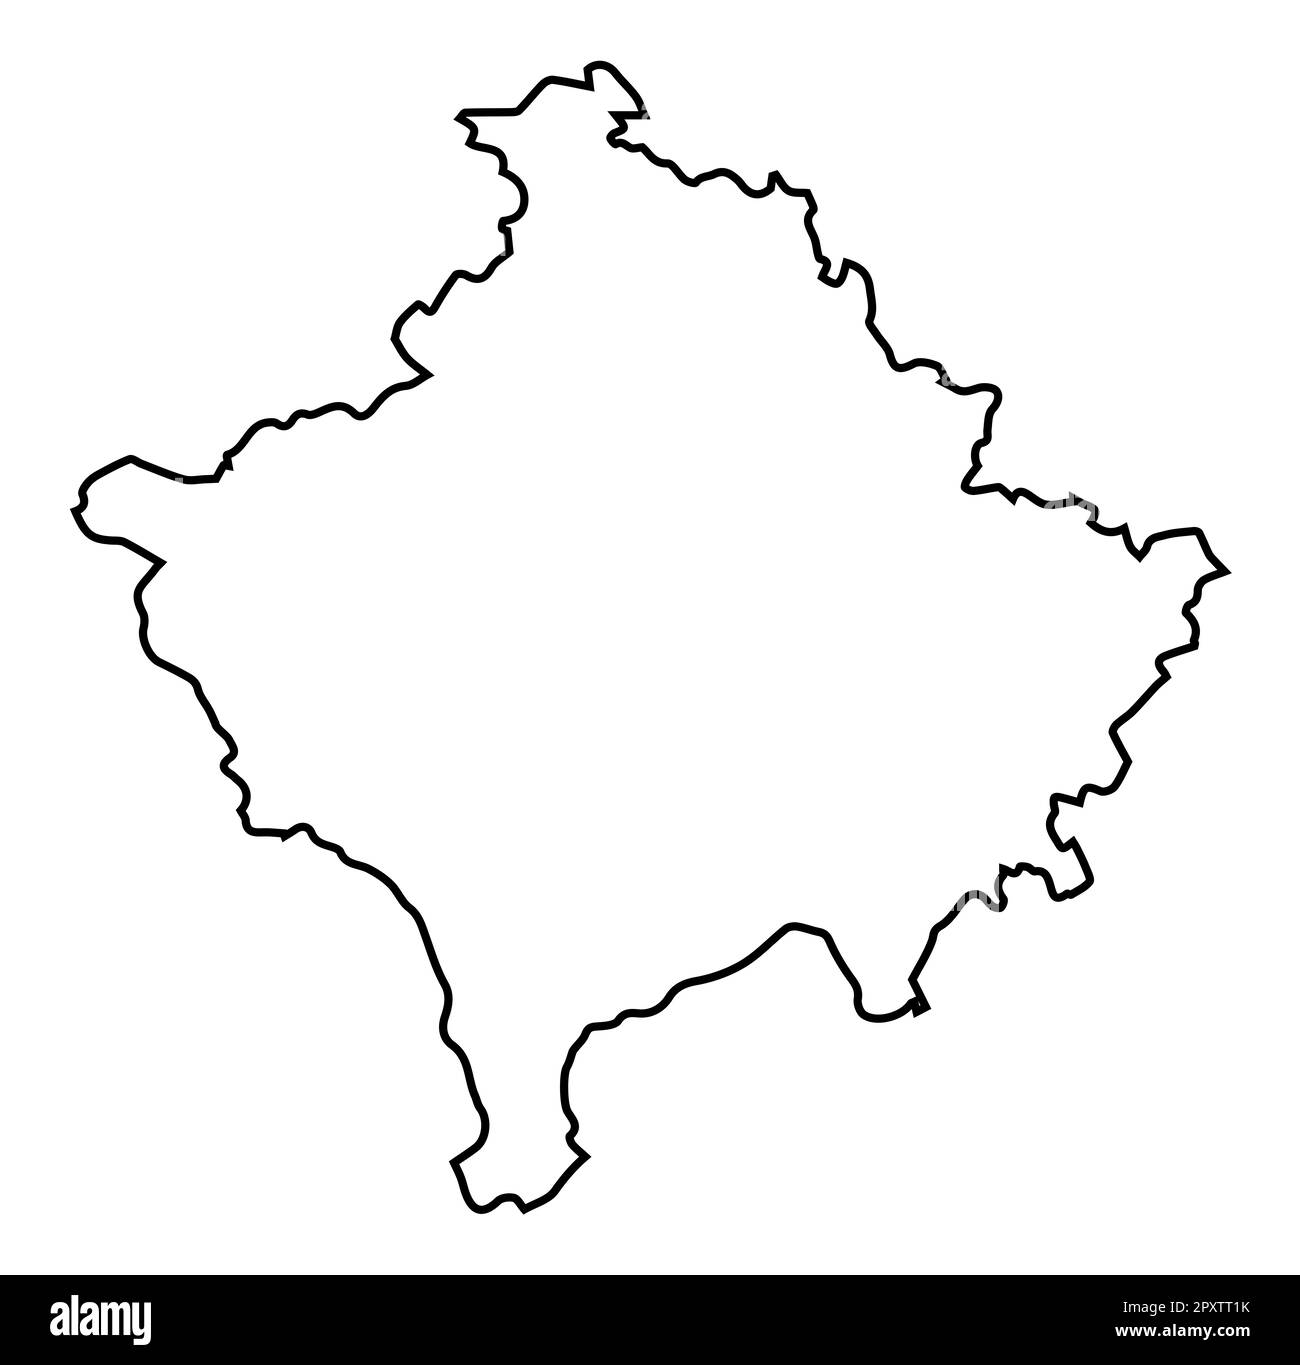 Kosovo map outline set over a white background Stock Photo - Alamy